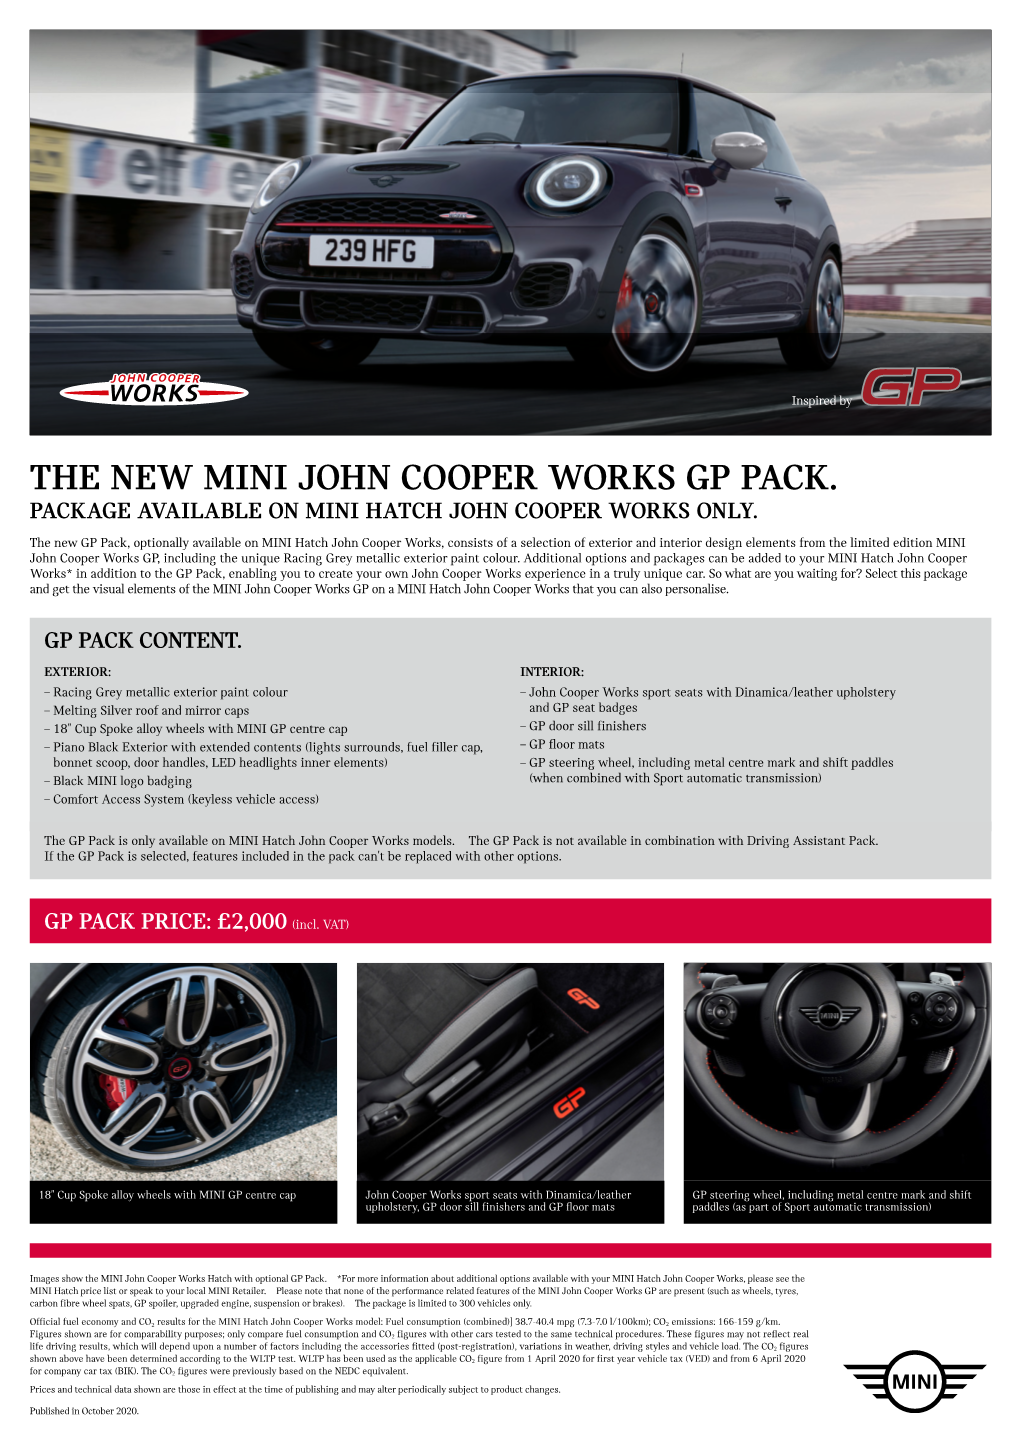 The New Mini John Cooper Works Gp Pack. Package Available on Mini Hatch John Cooper Works Only